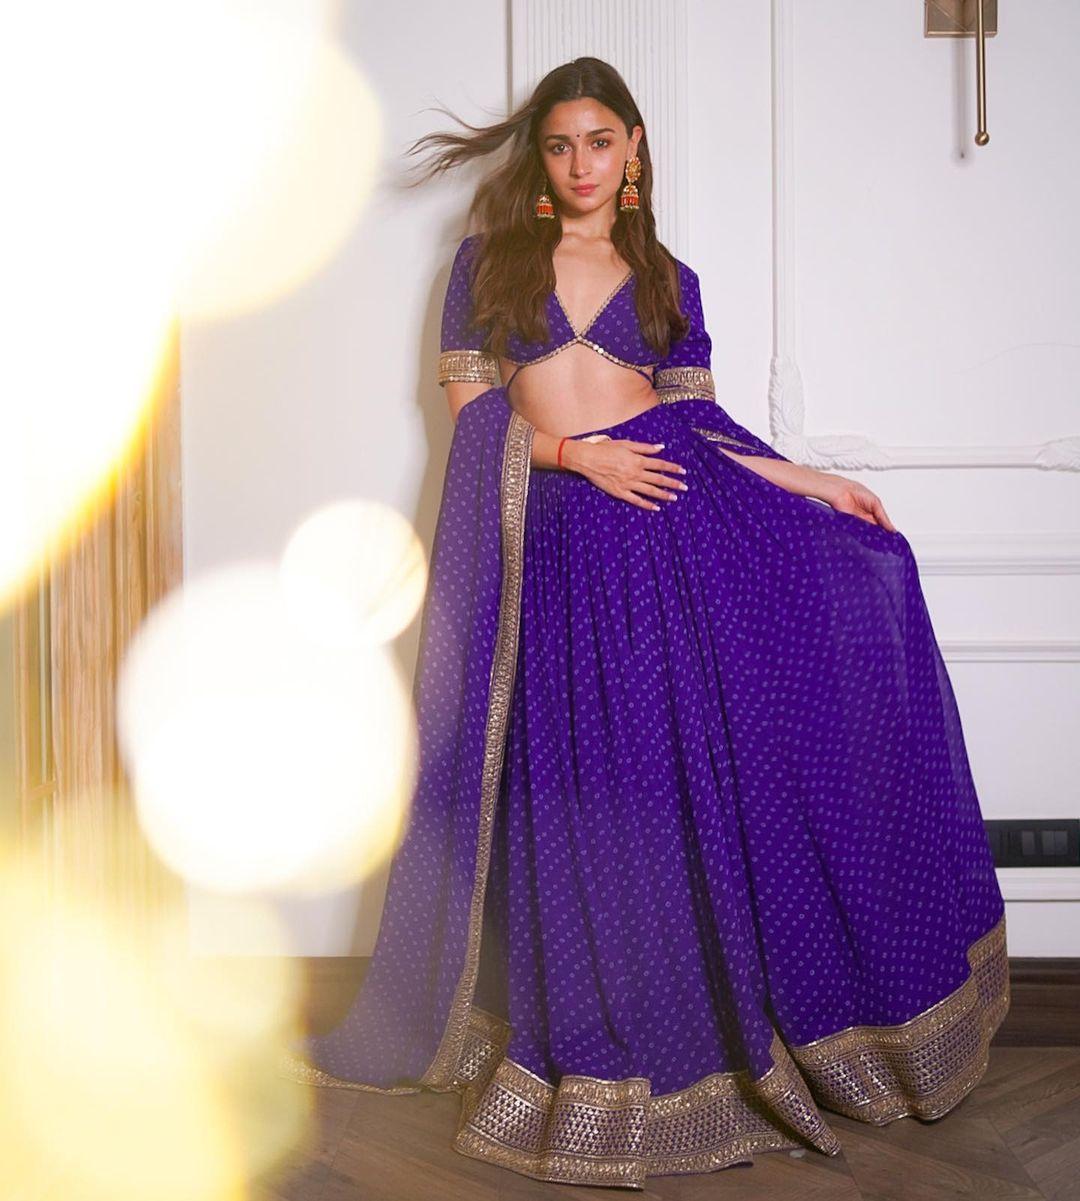 Alia Bhatt's Trendiest Looks That Make Her The Ultimate Style Diva